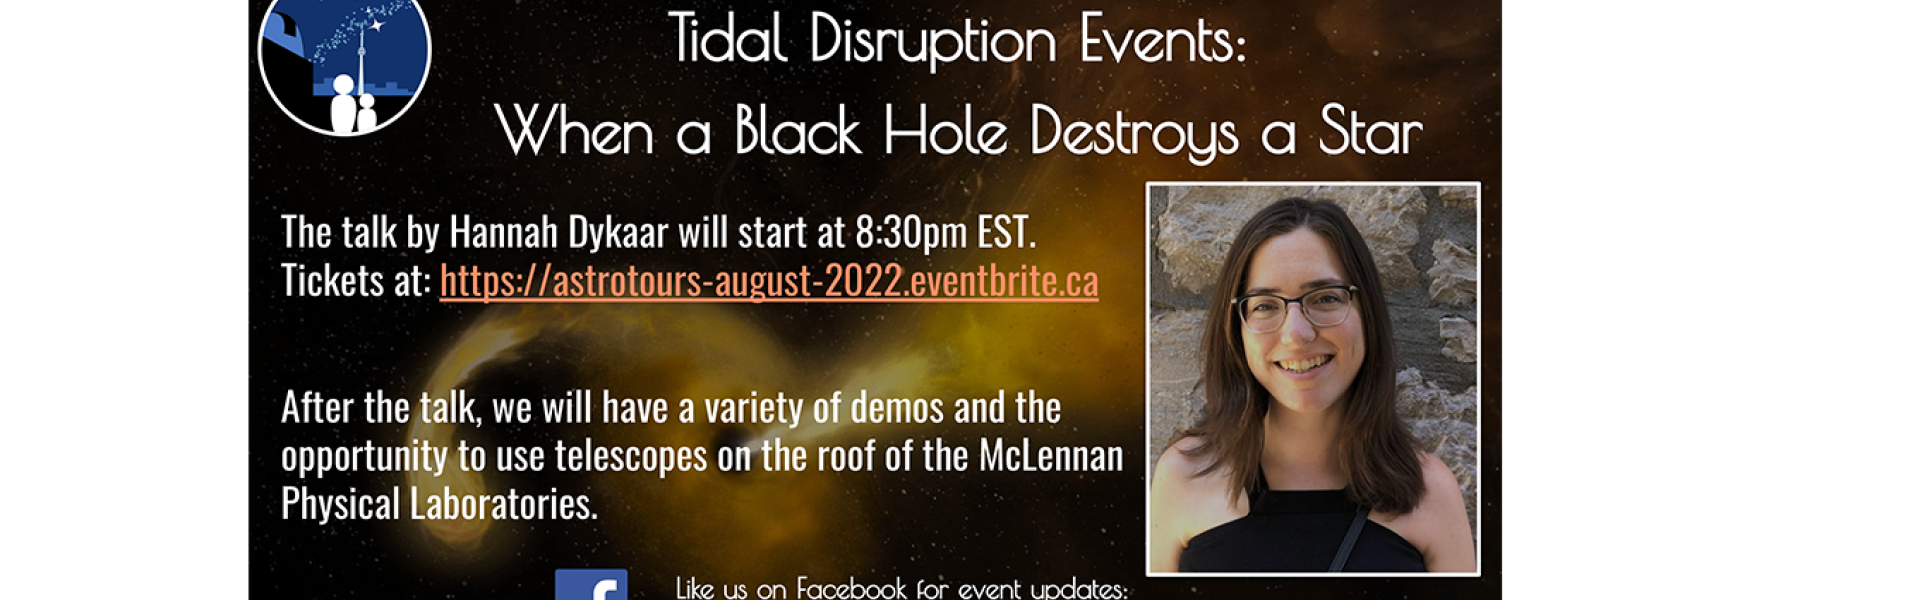 Tidal Disruption Events: When a Black Hole Destroys a Star